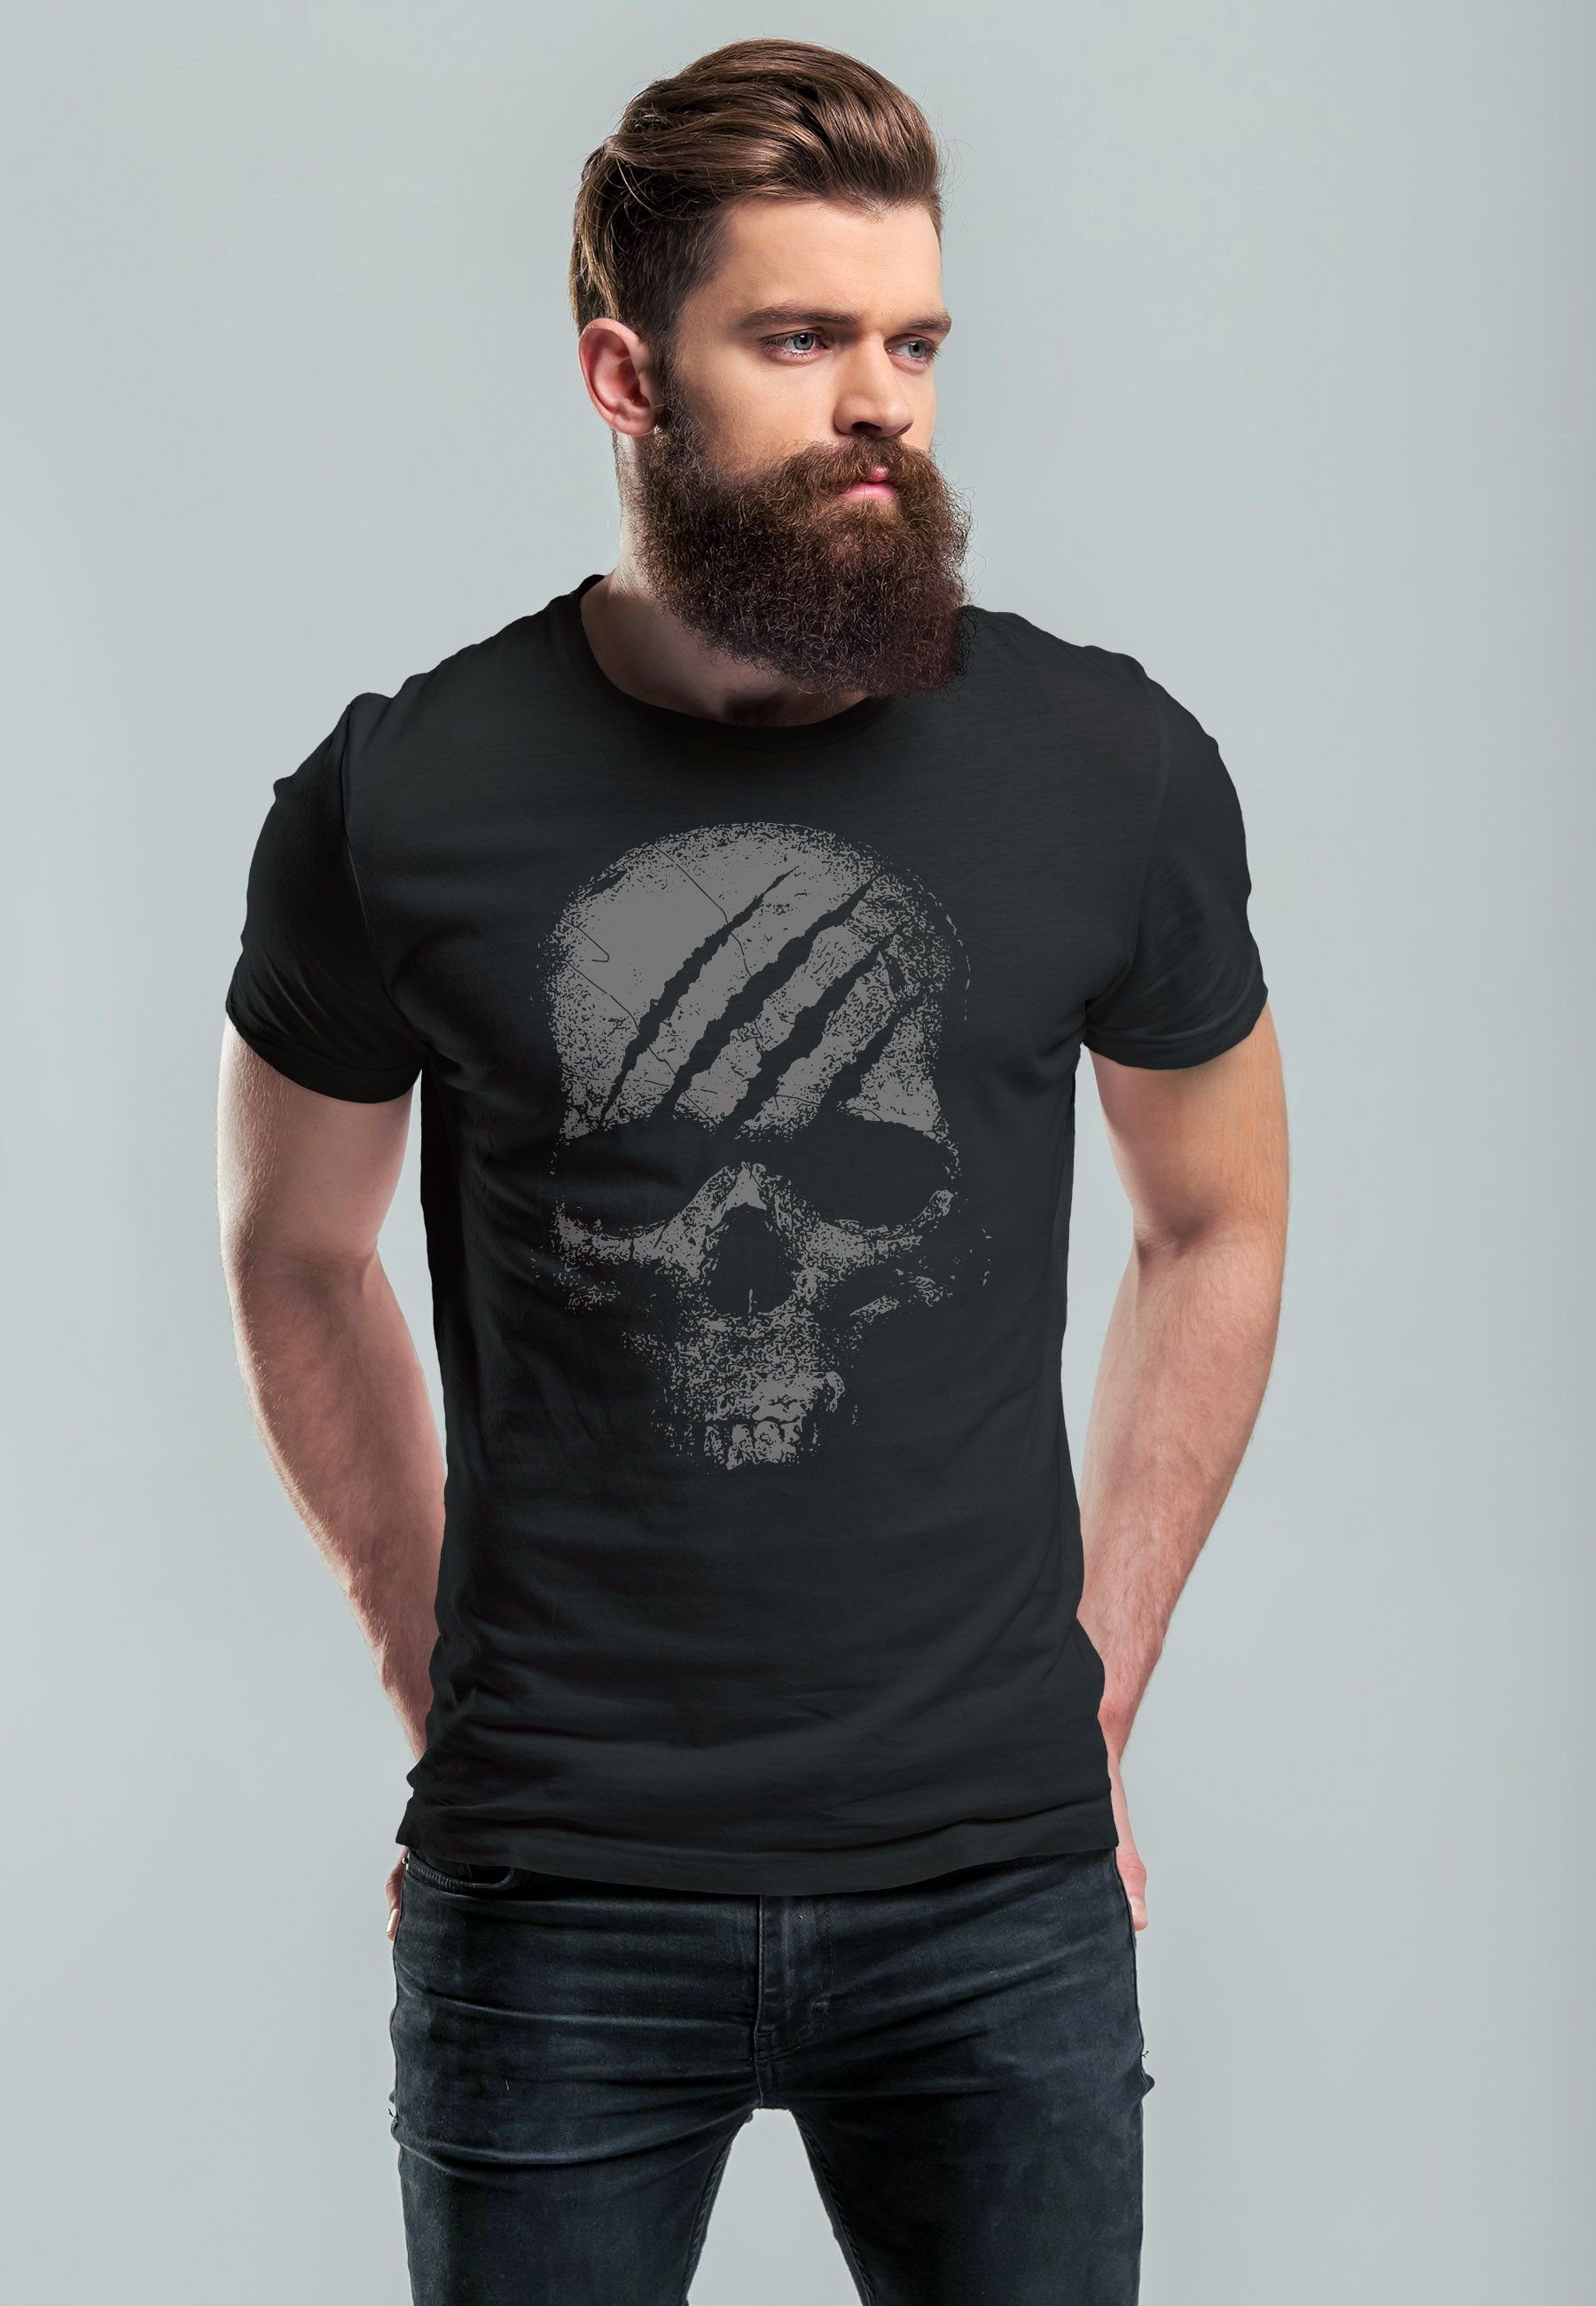 Neverless Print-Shirt Herren T-Shirt Totenkopf Print Totenschädel schwarz Skelett mit Print Fas Skull Aufdruck